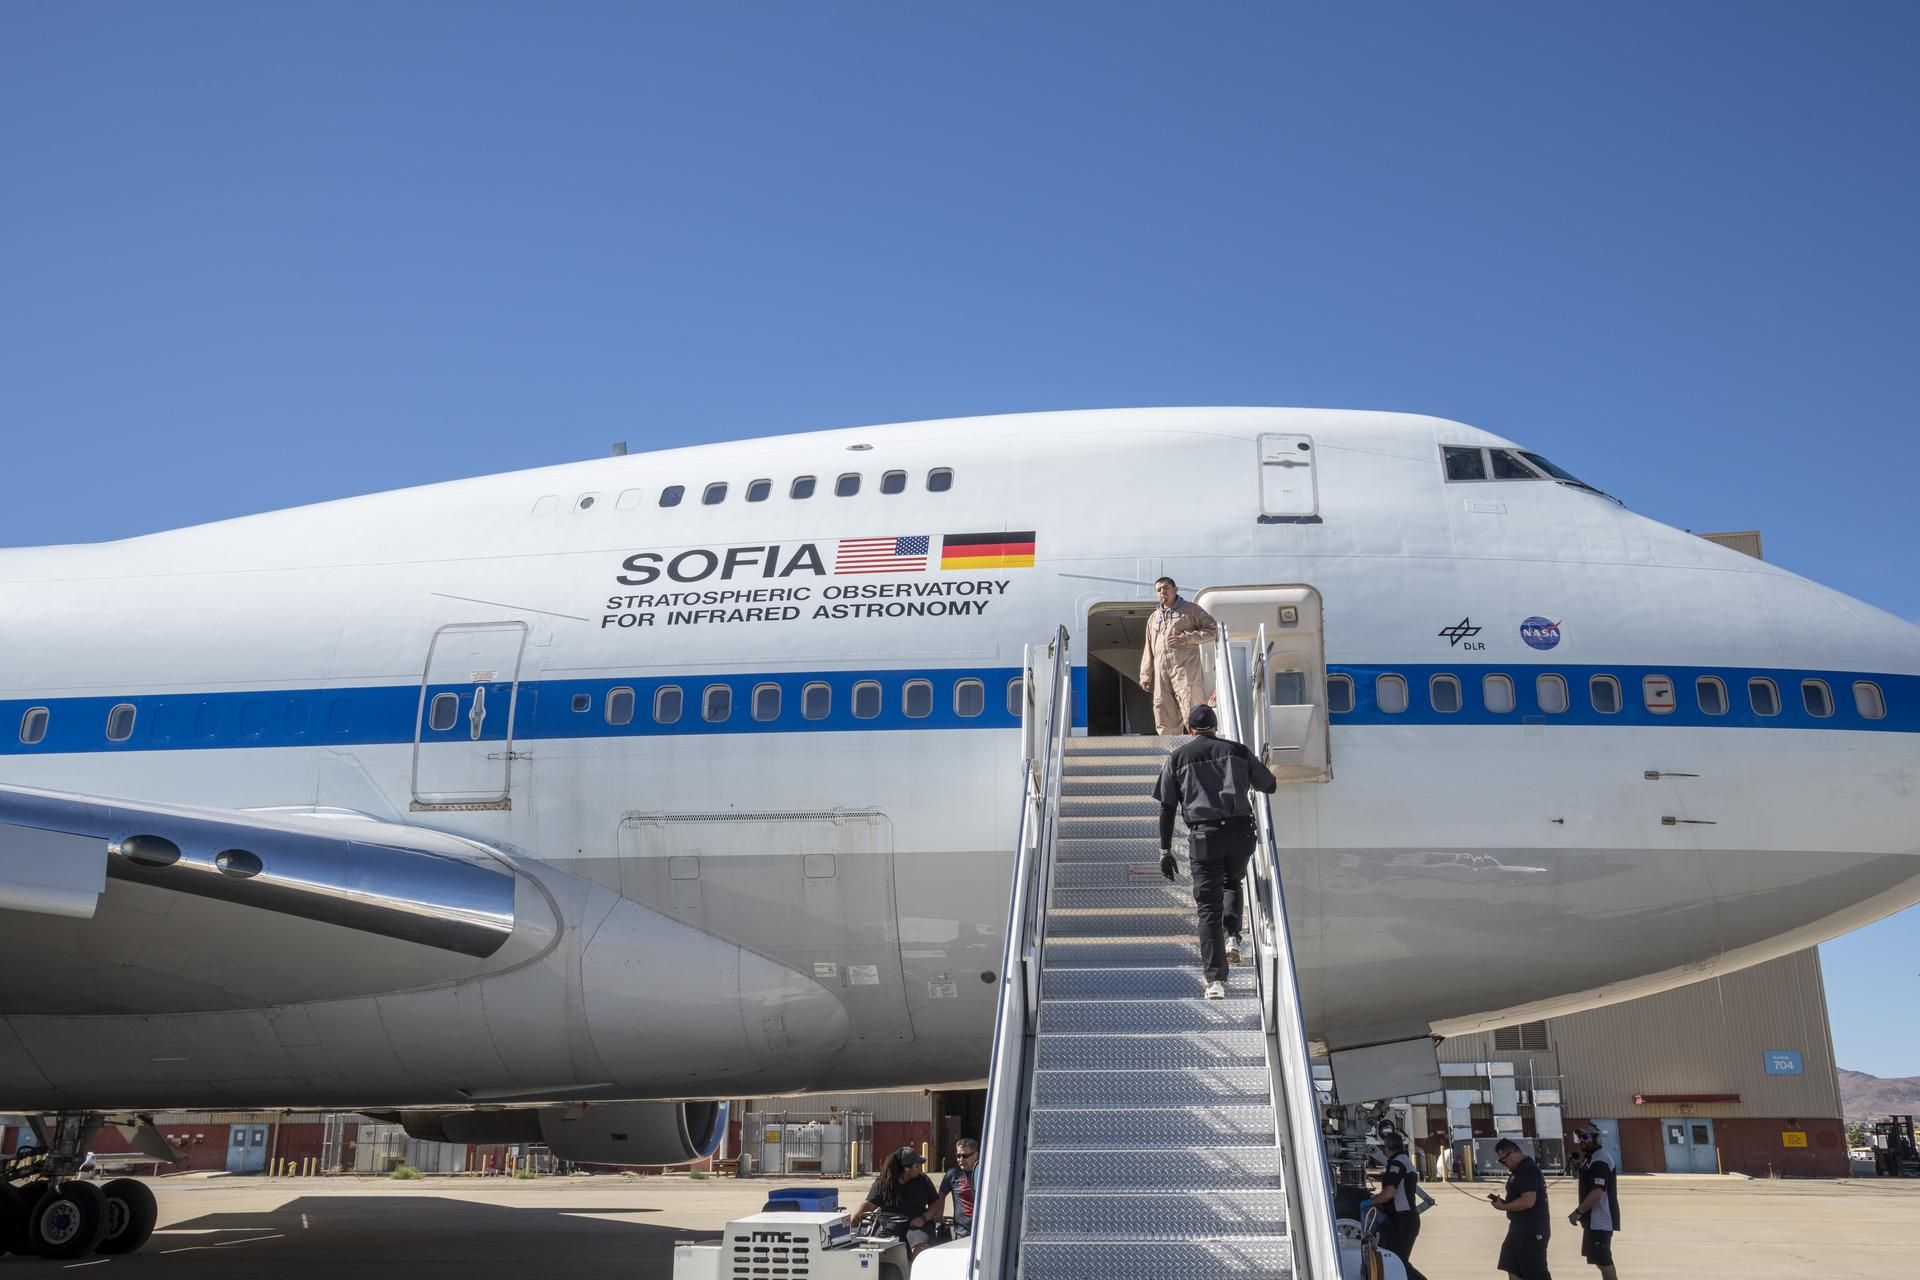 Le SOFIA Boeing 747 de la NASA a effectué son dernier vol